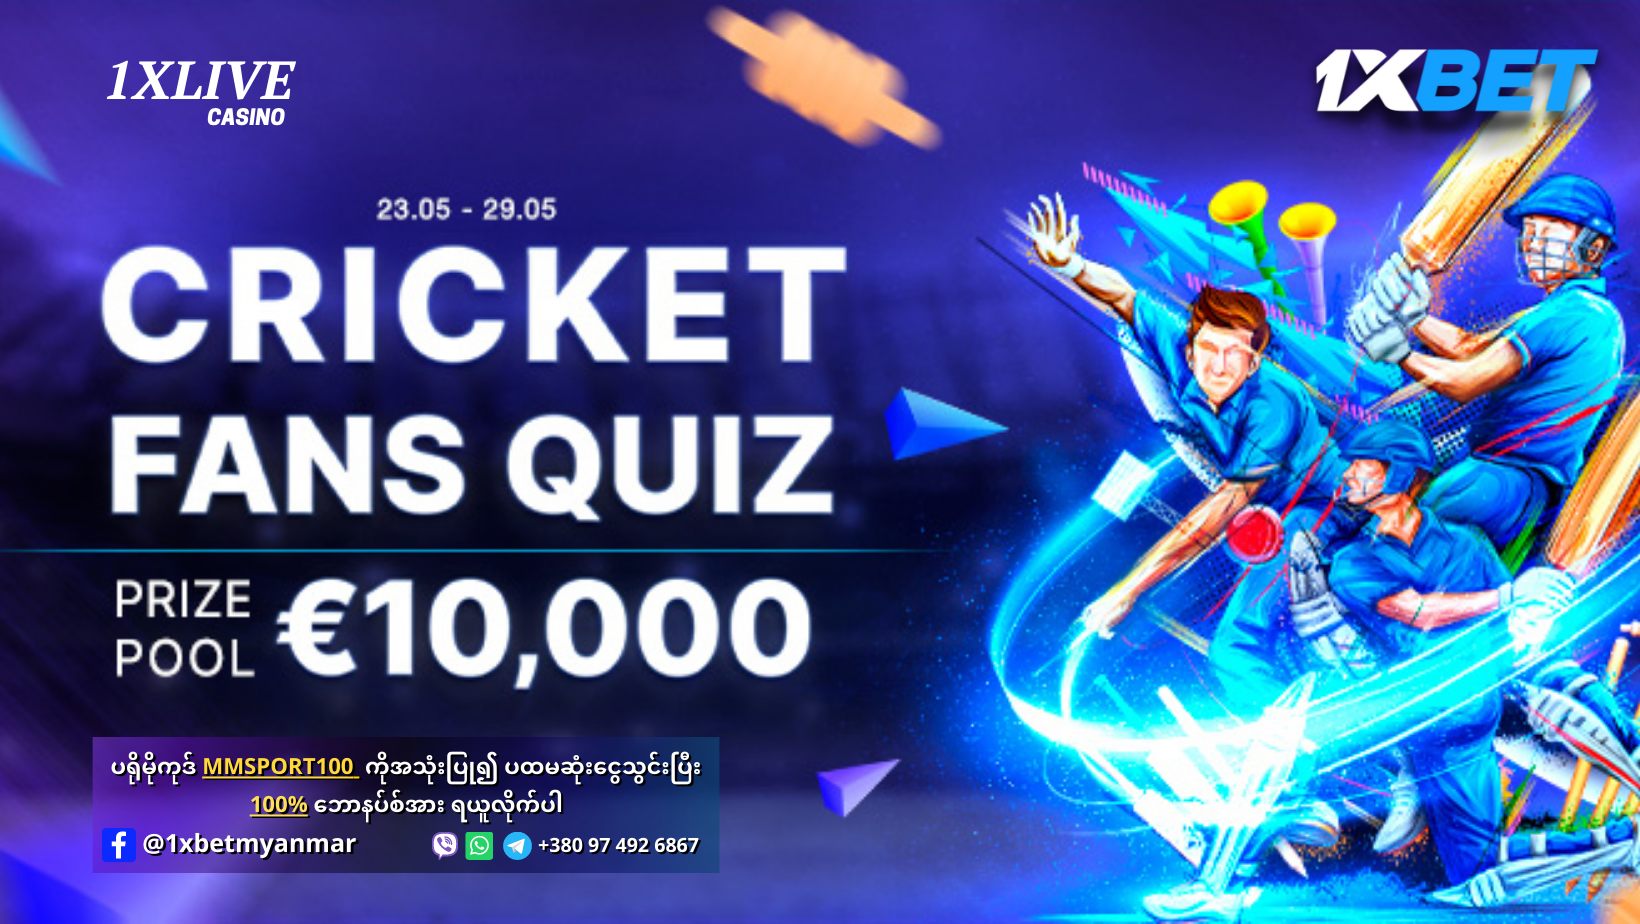 1xBet Cricket Fans Quiz Promotion